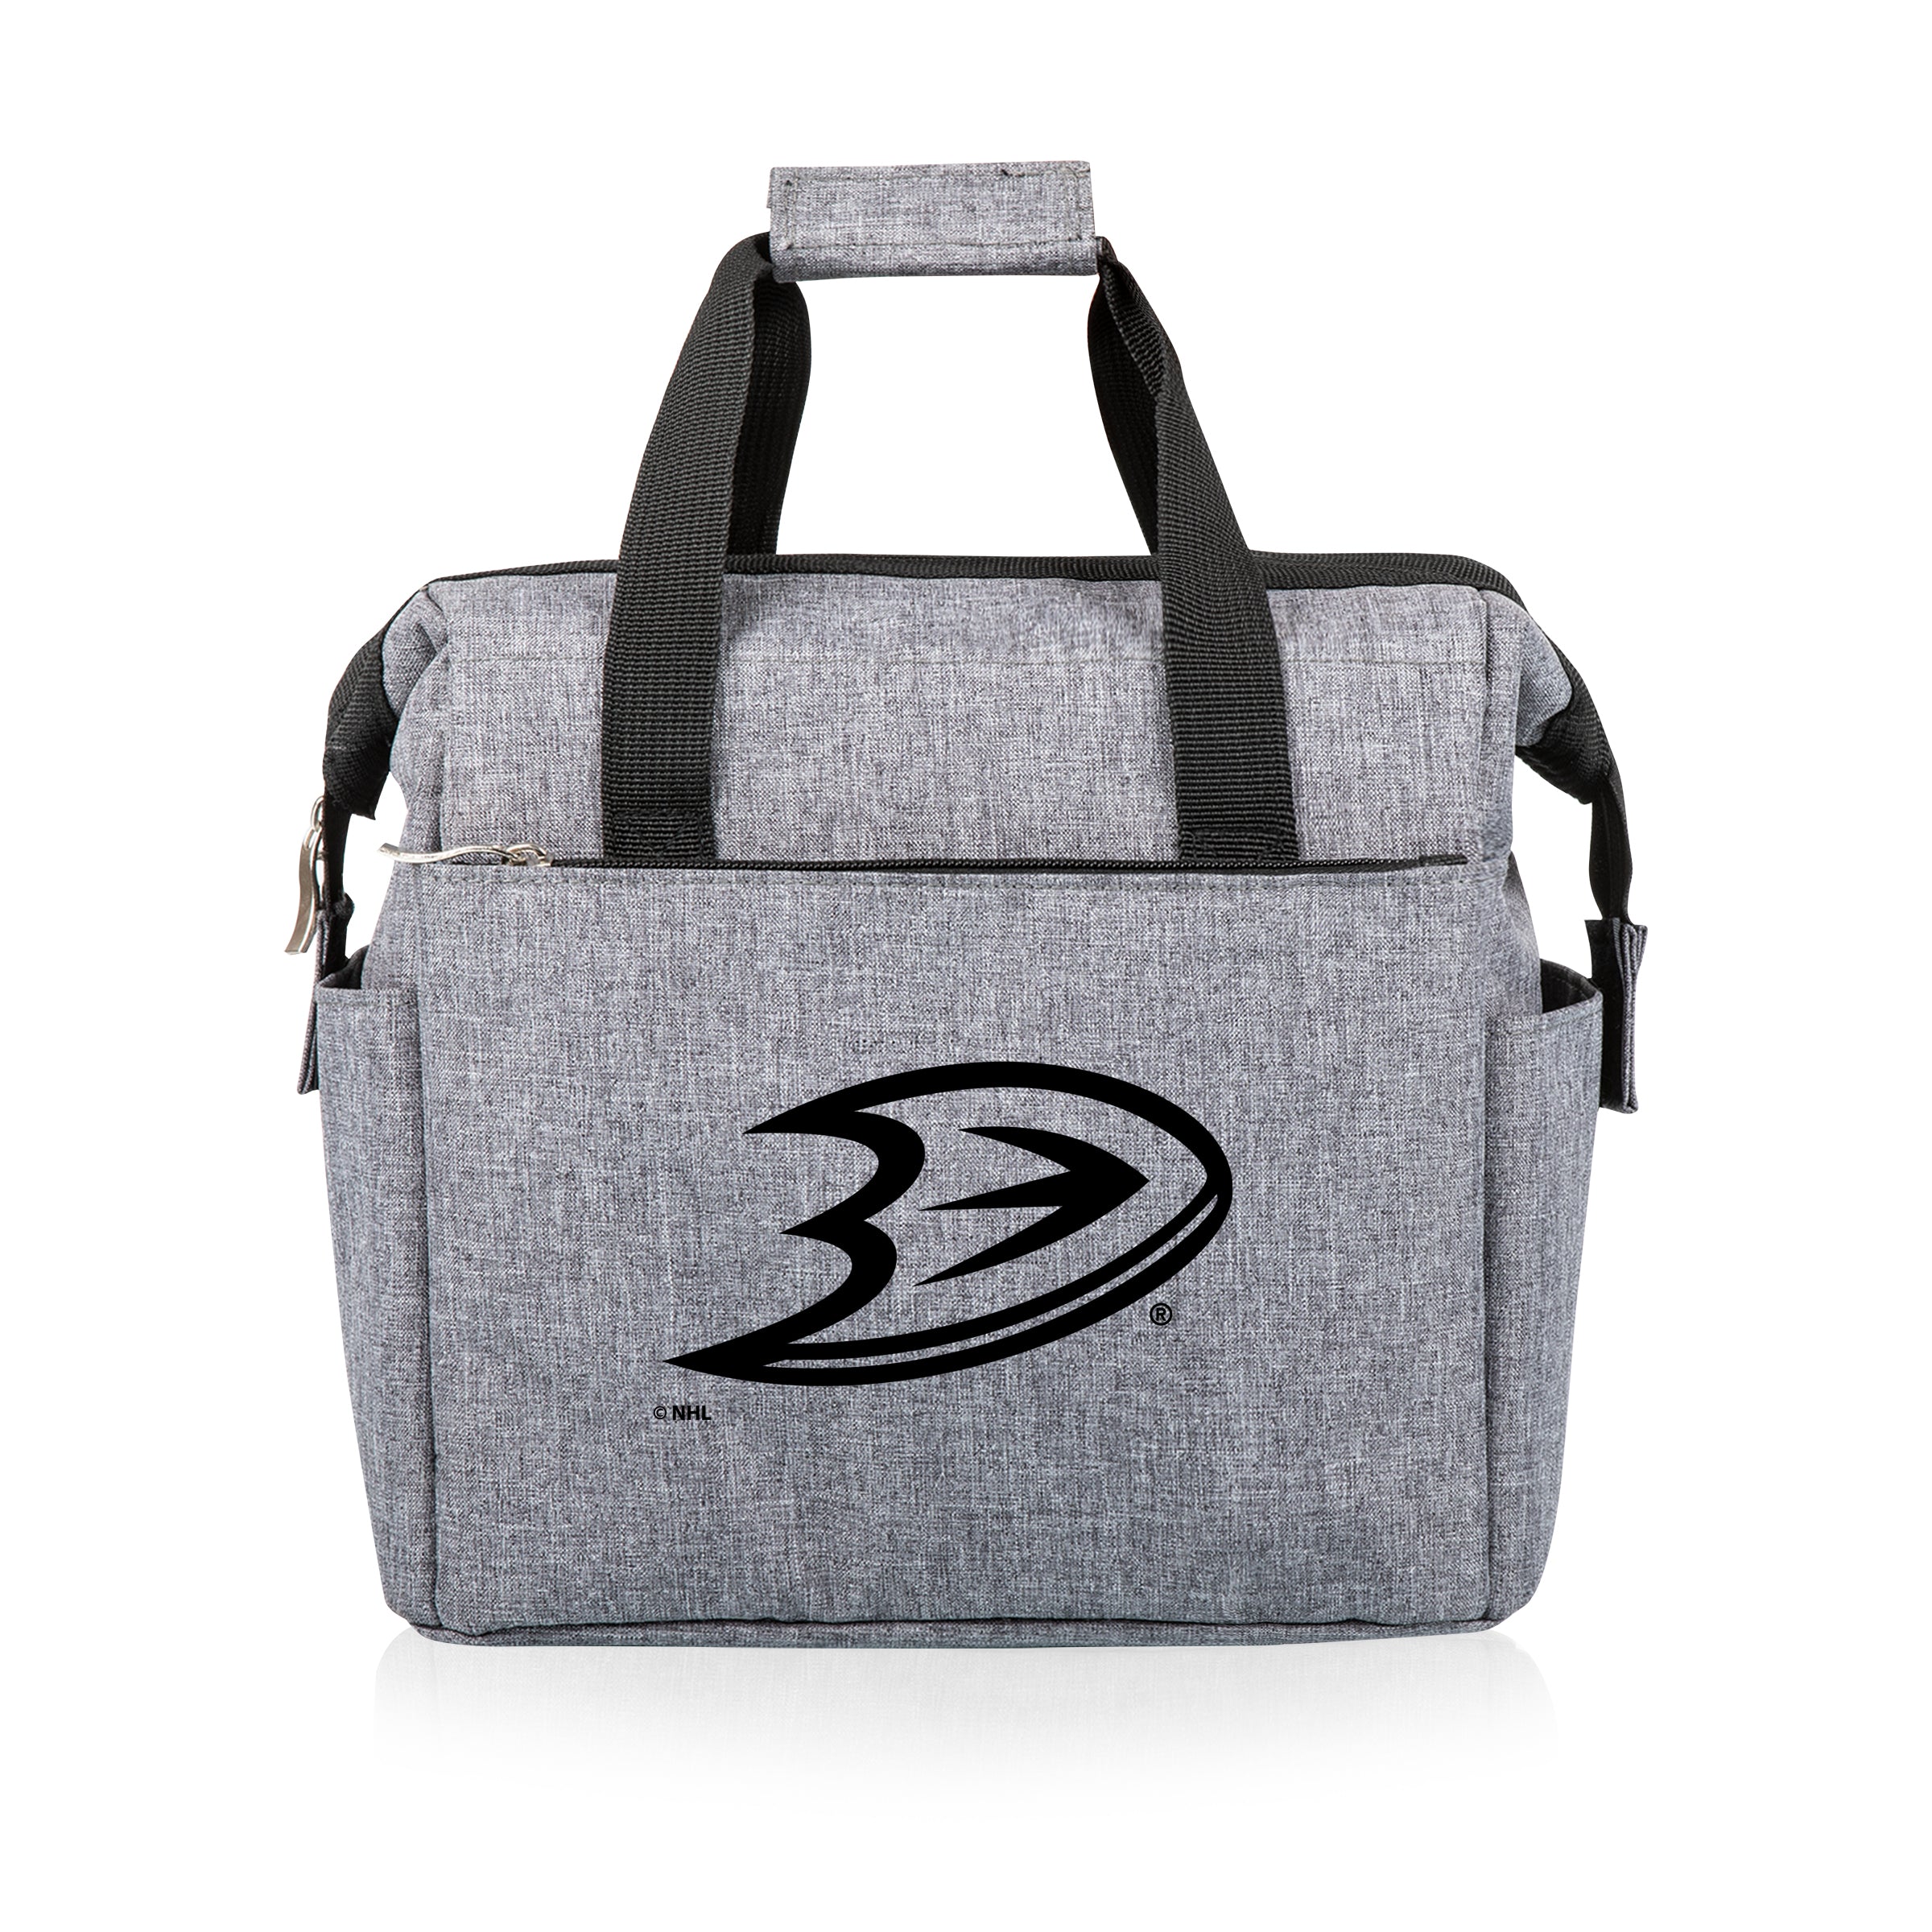 Anaheim Ducks - On The Go Lunch Bag Cooler